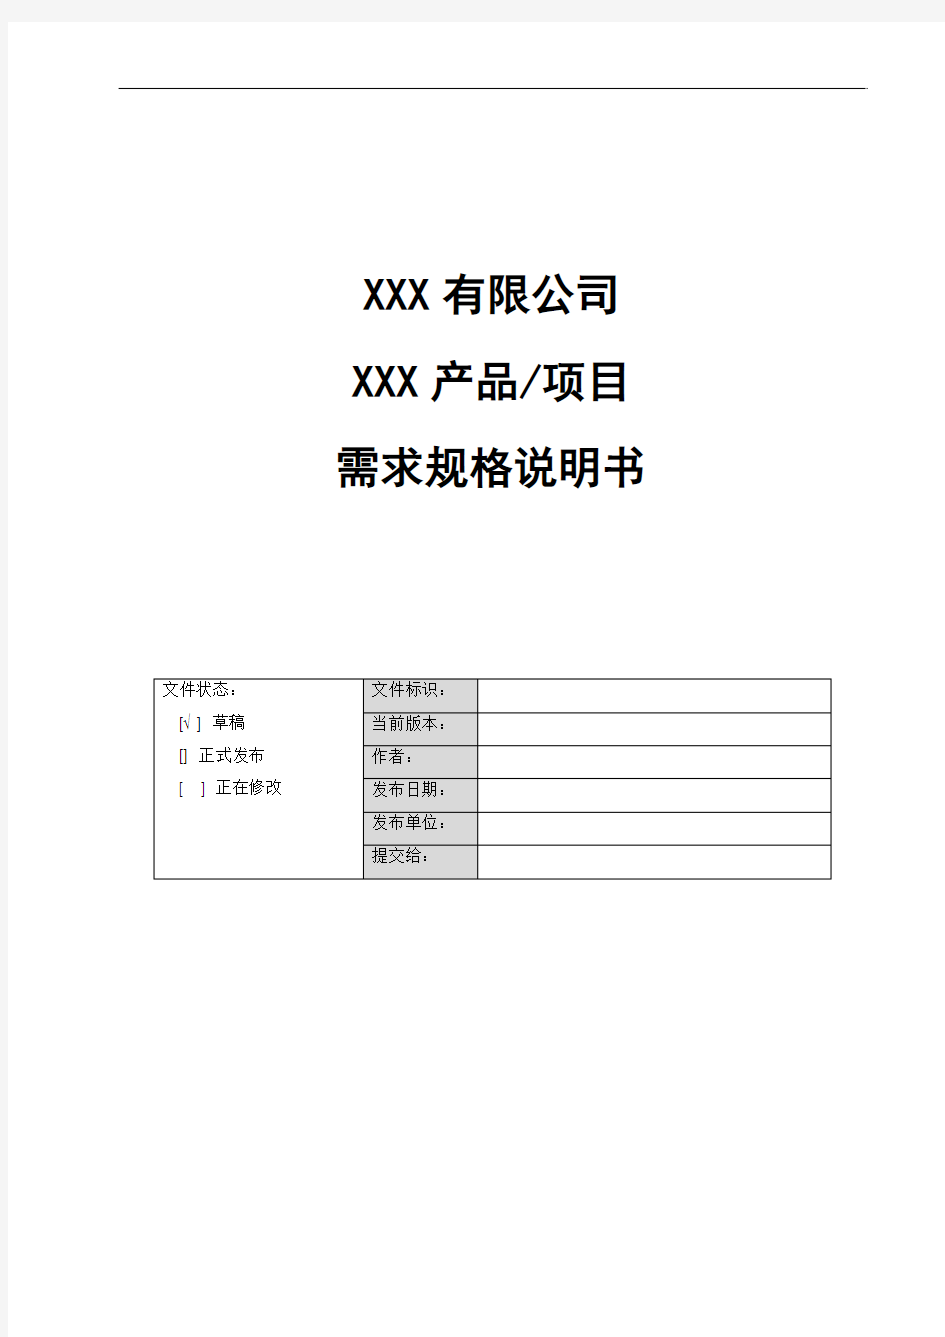 XXX项目需求规格说明书_模版V1.01